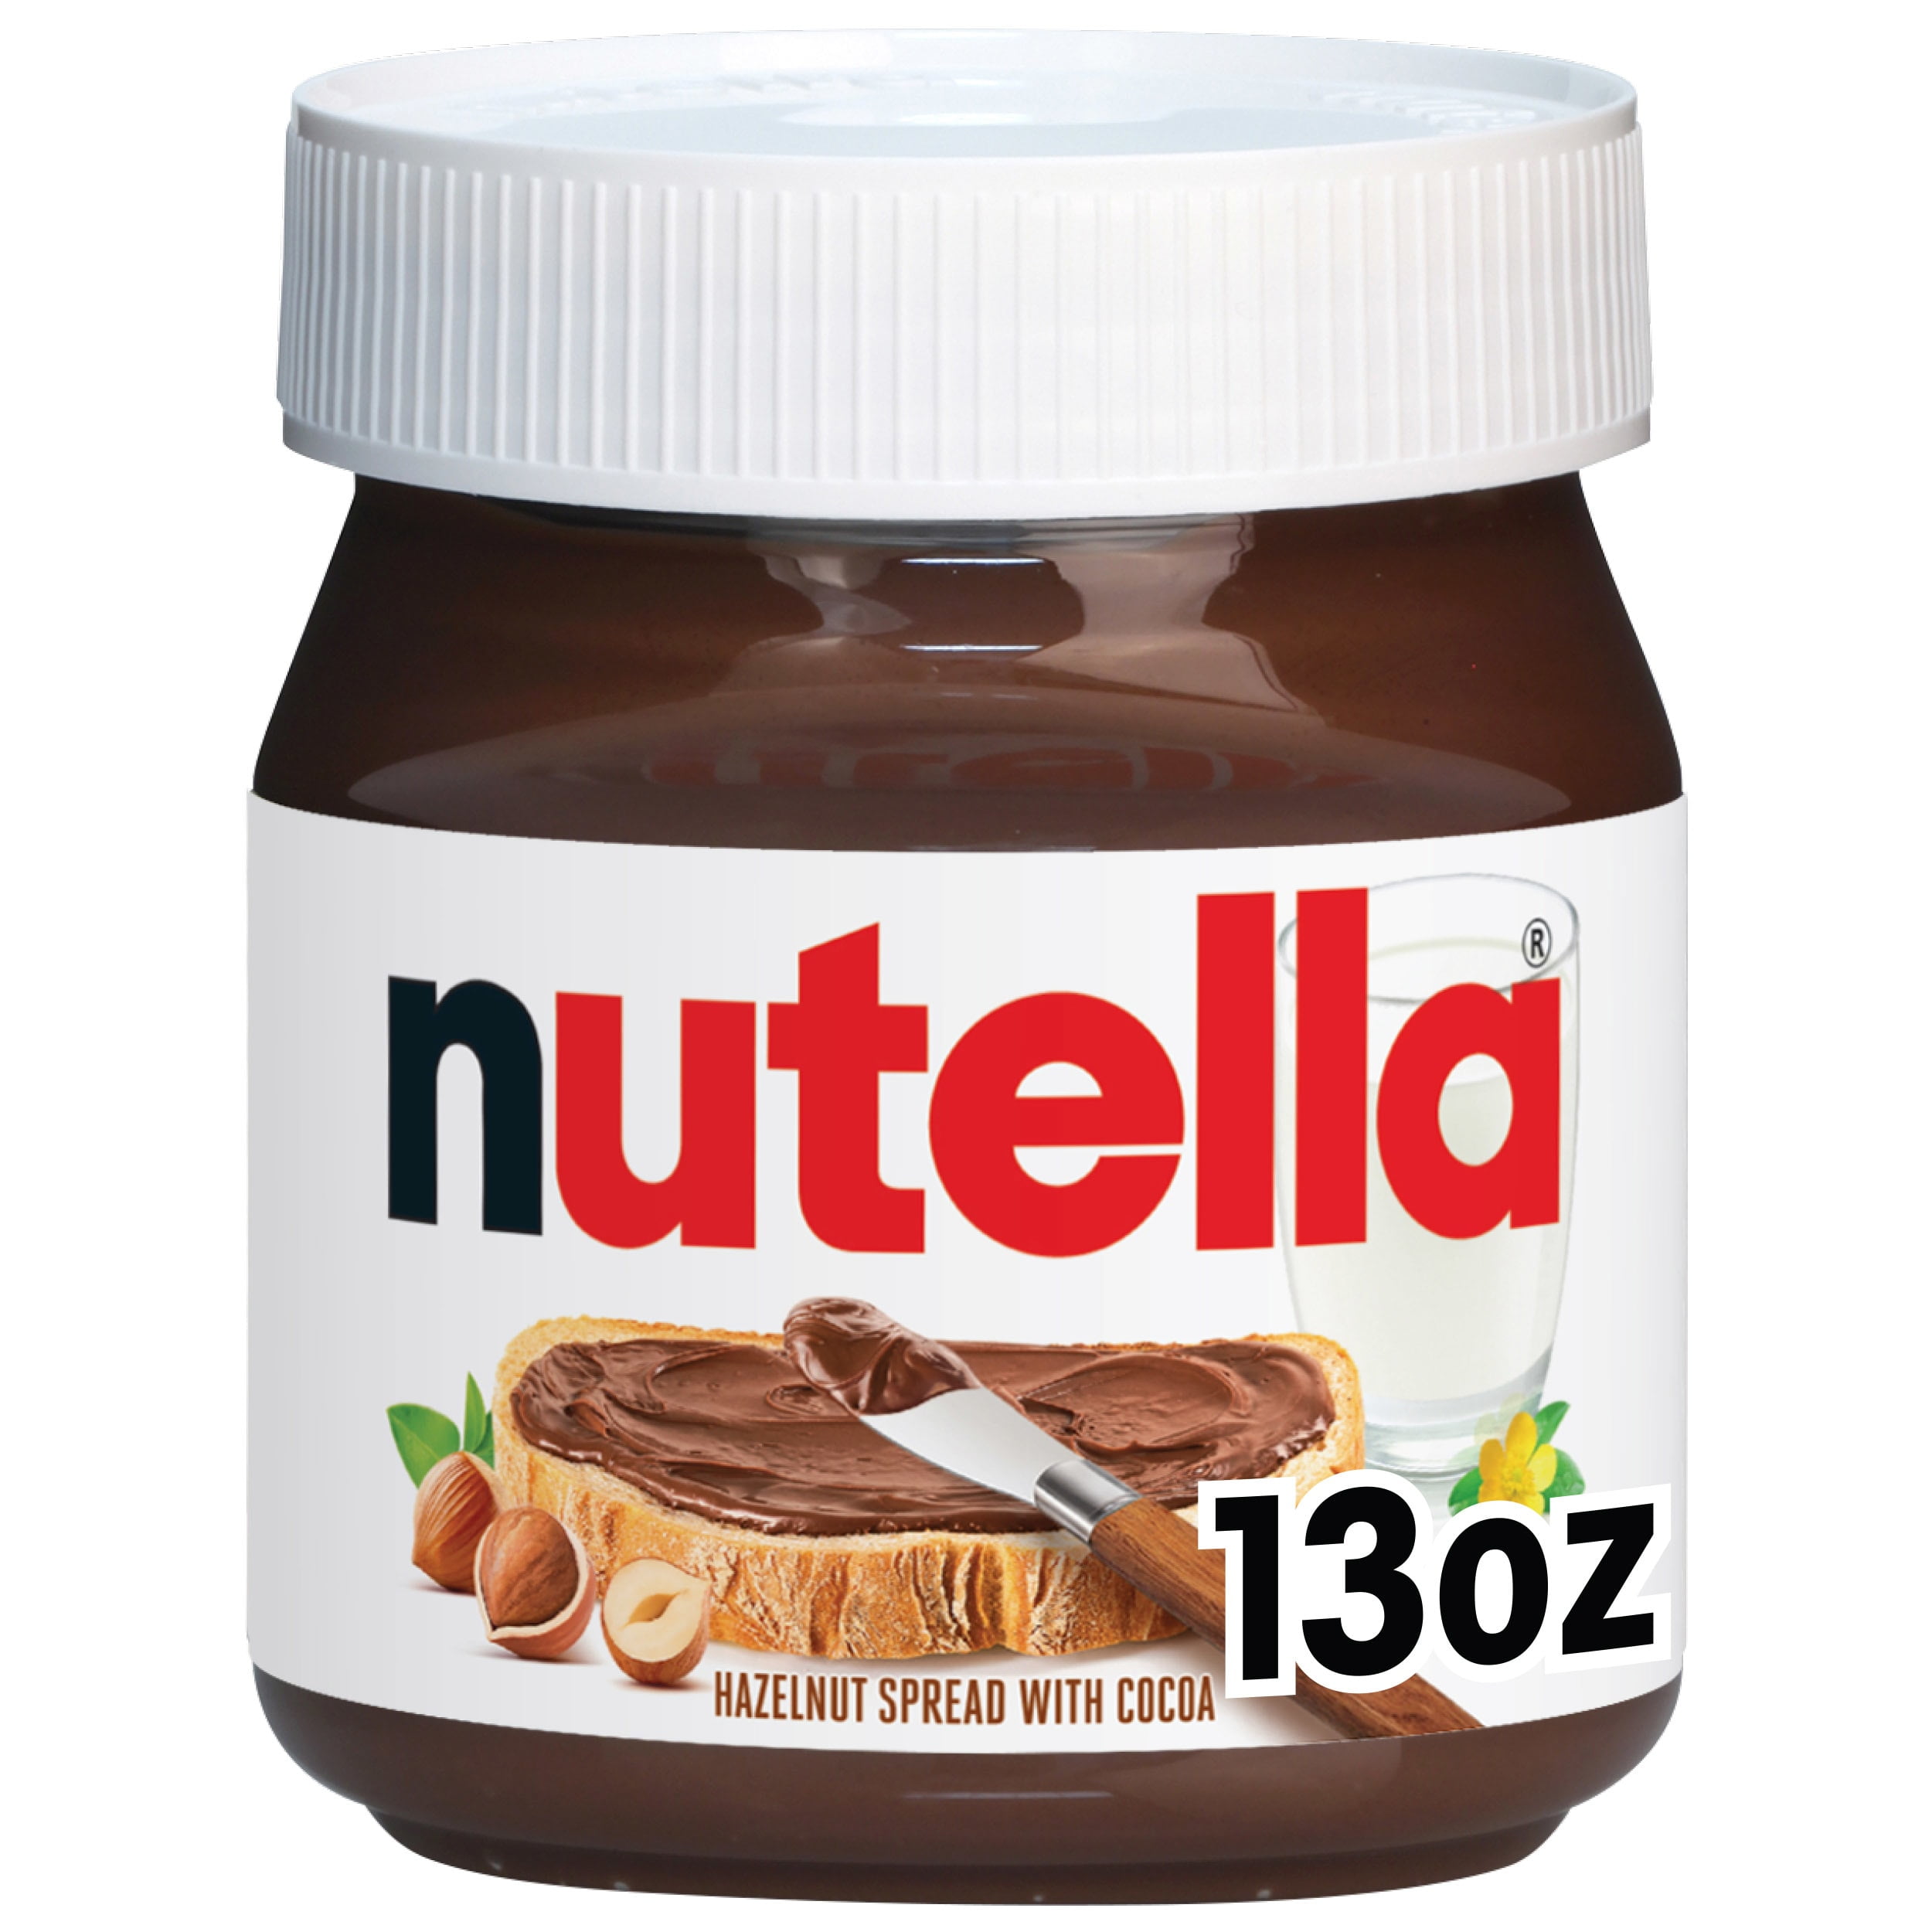 nutella-hazelnut-spread-with-cocoa-for-breakfast-13-oz-jar-walmart